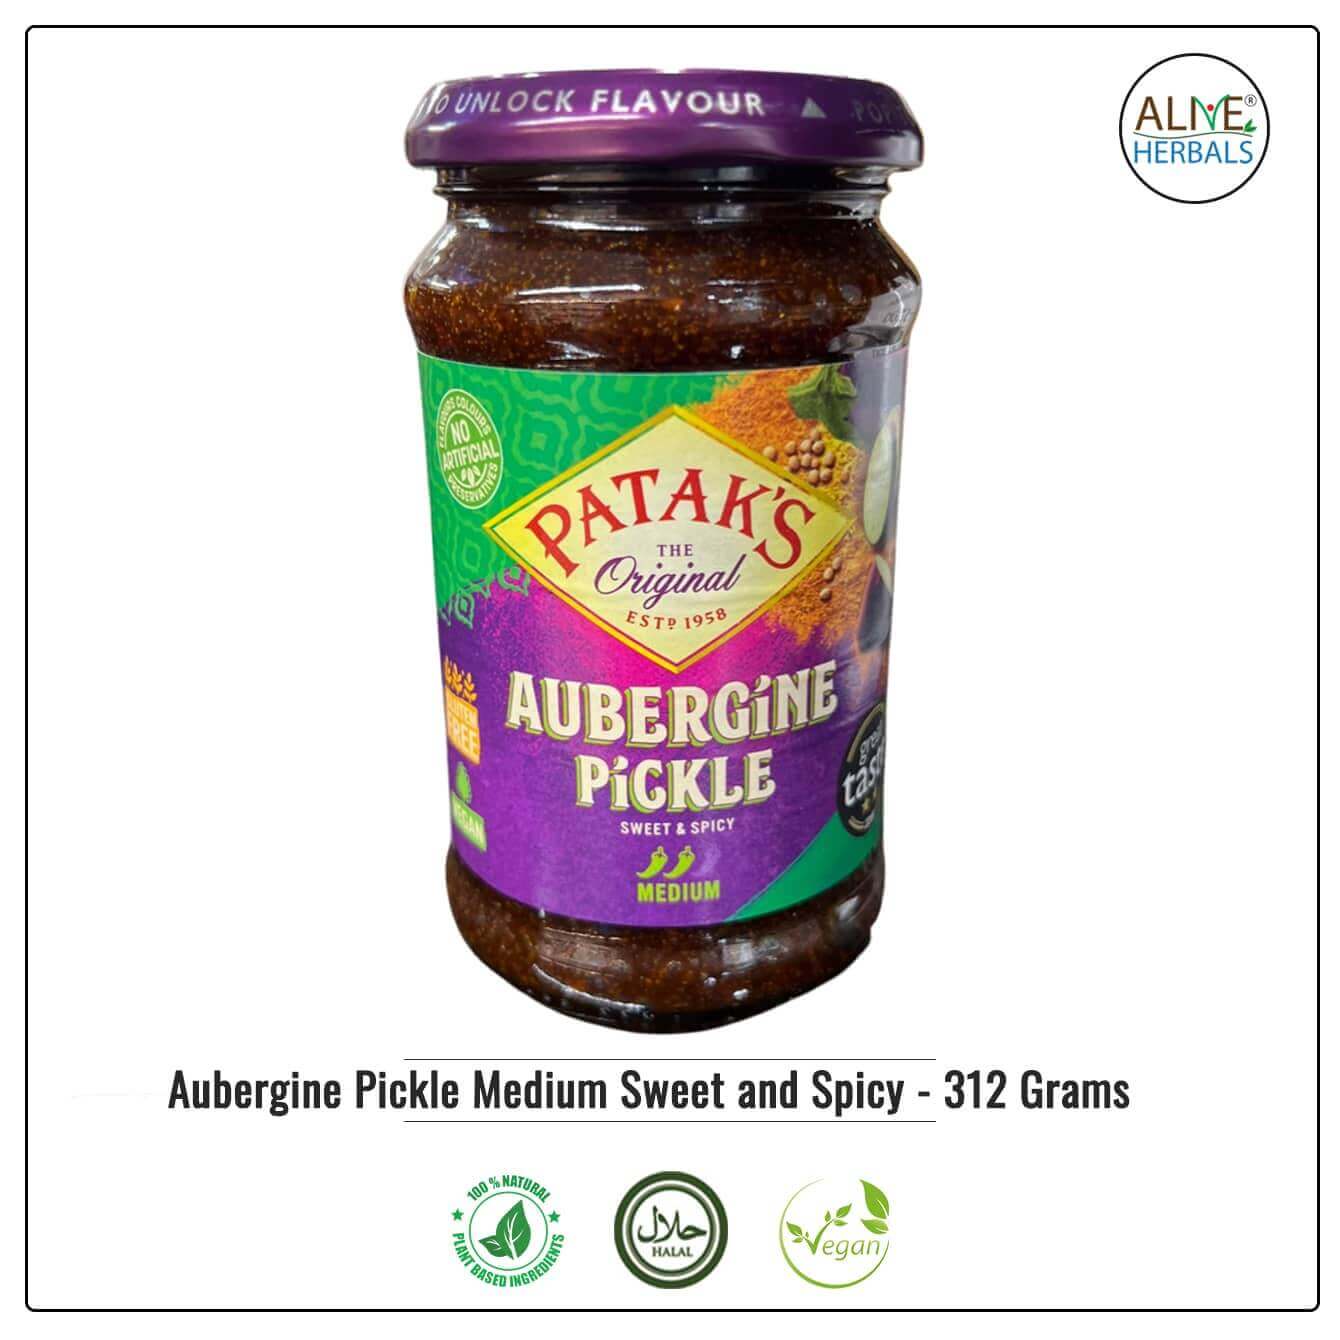 Aubergine Pickle Medium Sweet and Spicy - Alive Herbals